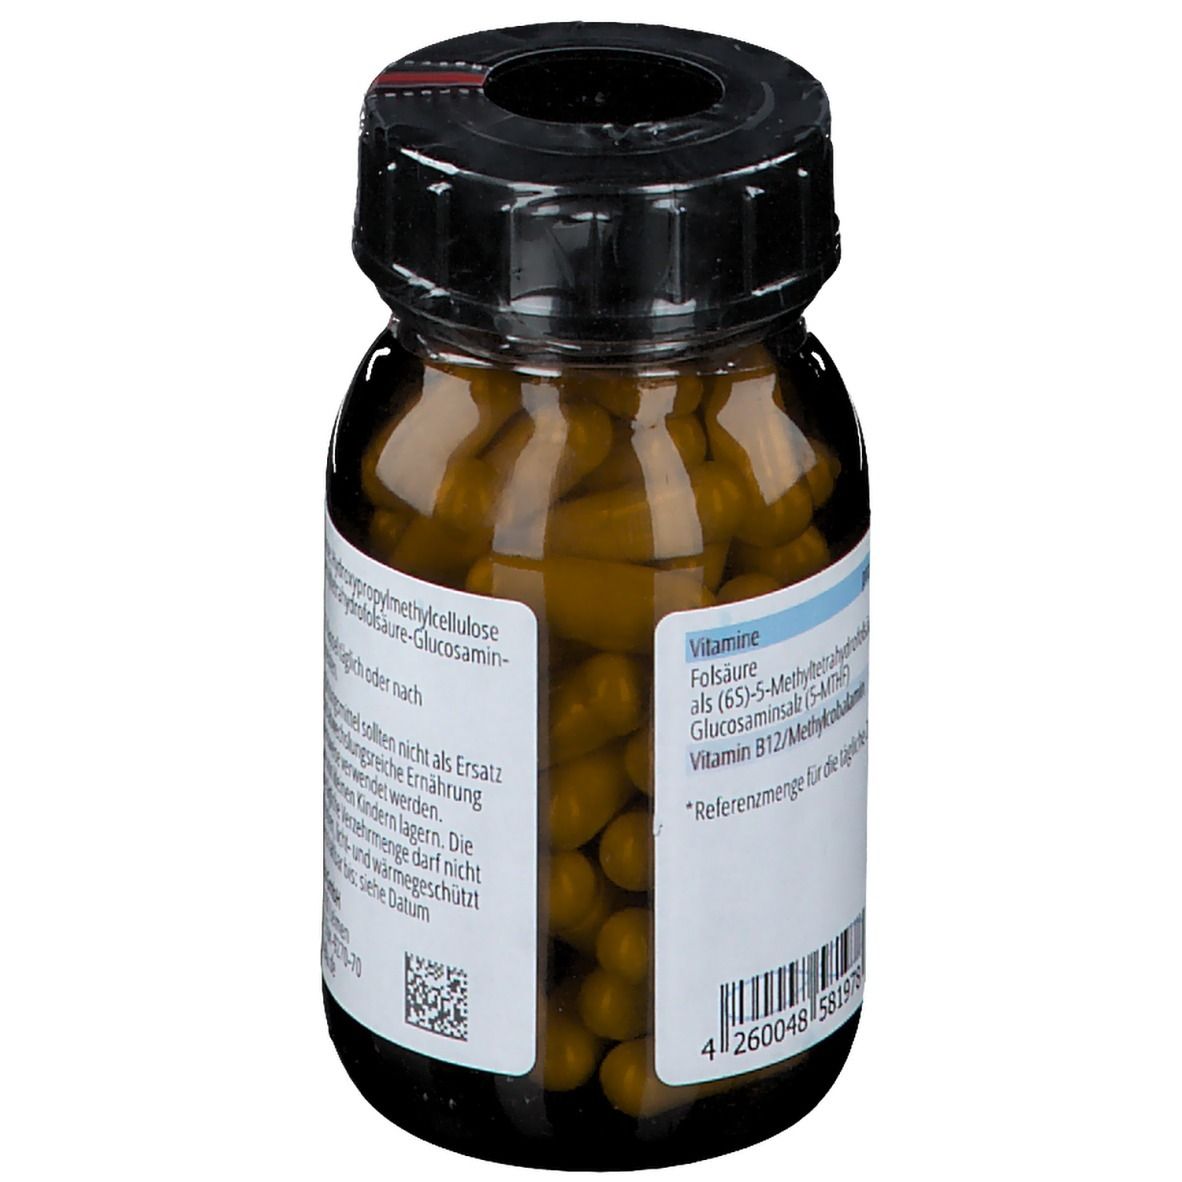 Heidelberger Chlorella® Folsäure aktiv + Vit. B12 aktiv